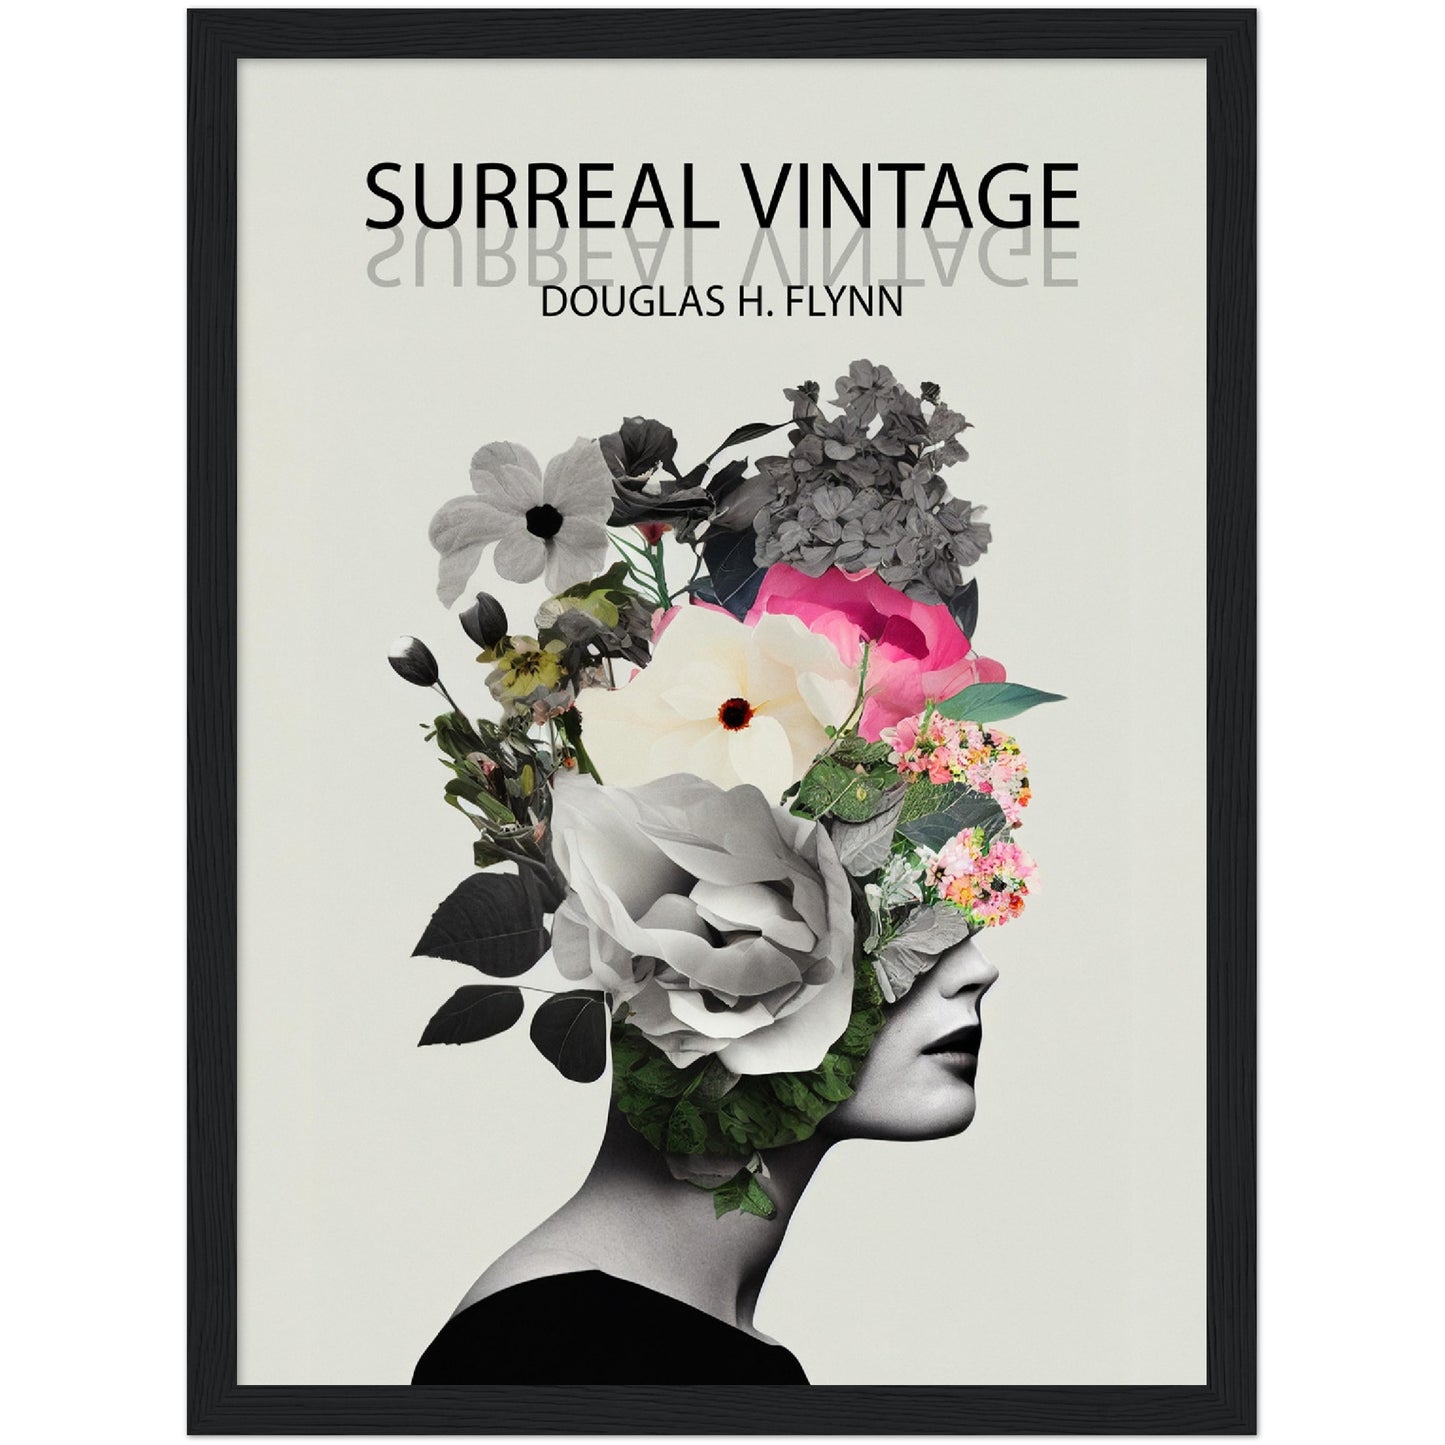 »Surreal Vintage« merch poster